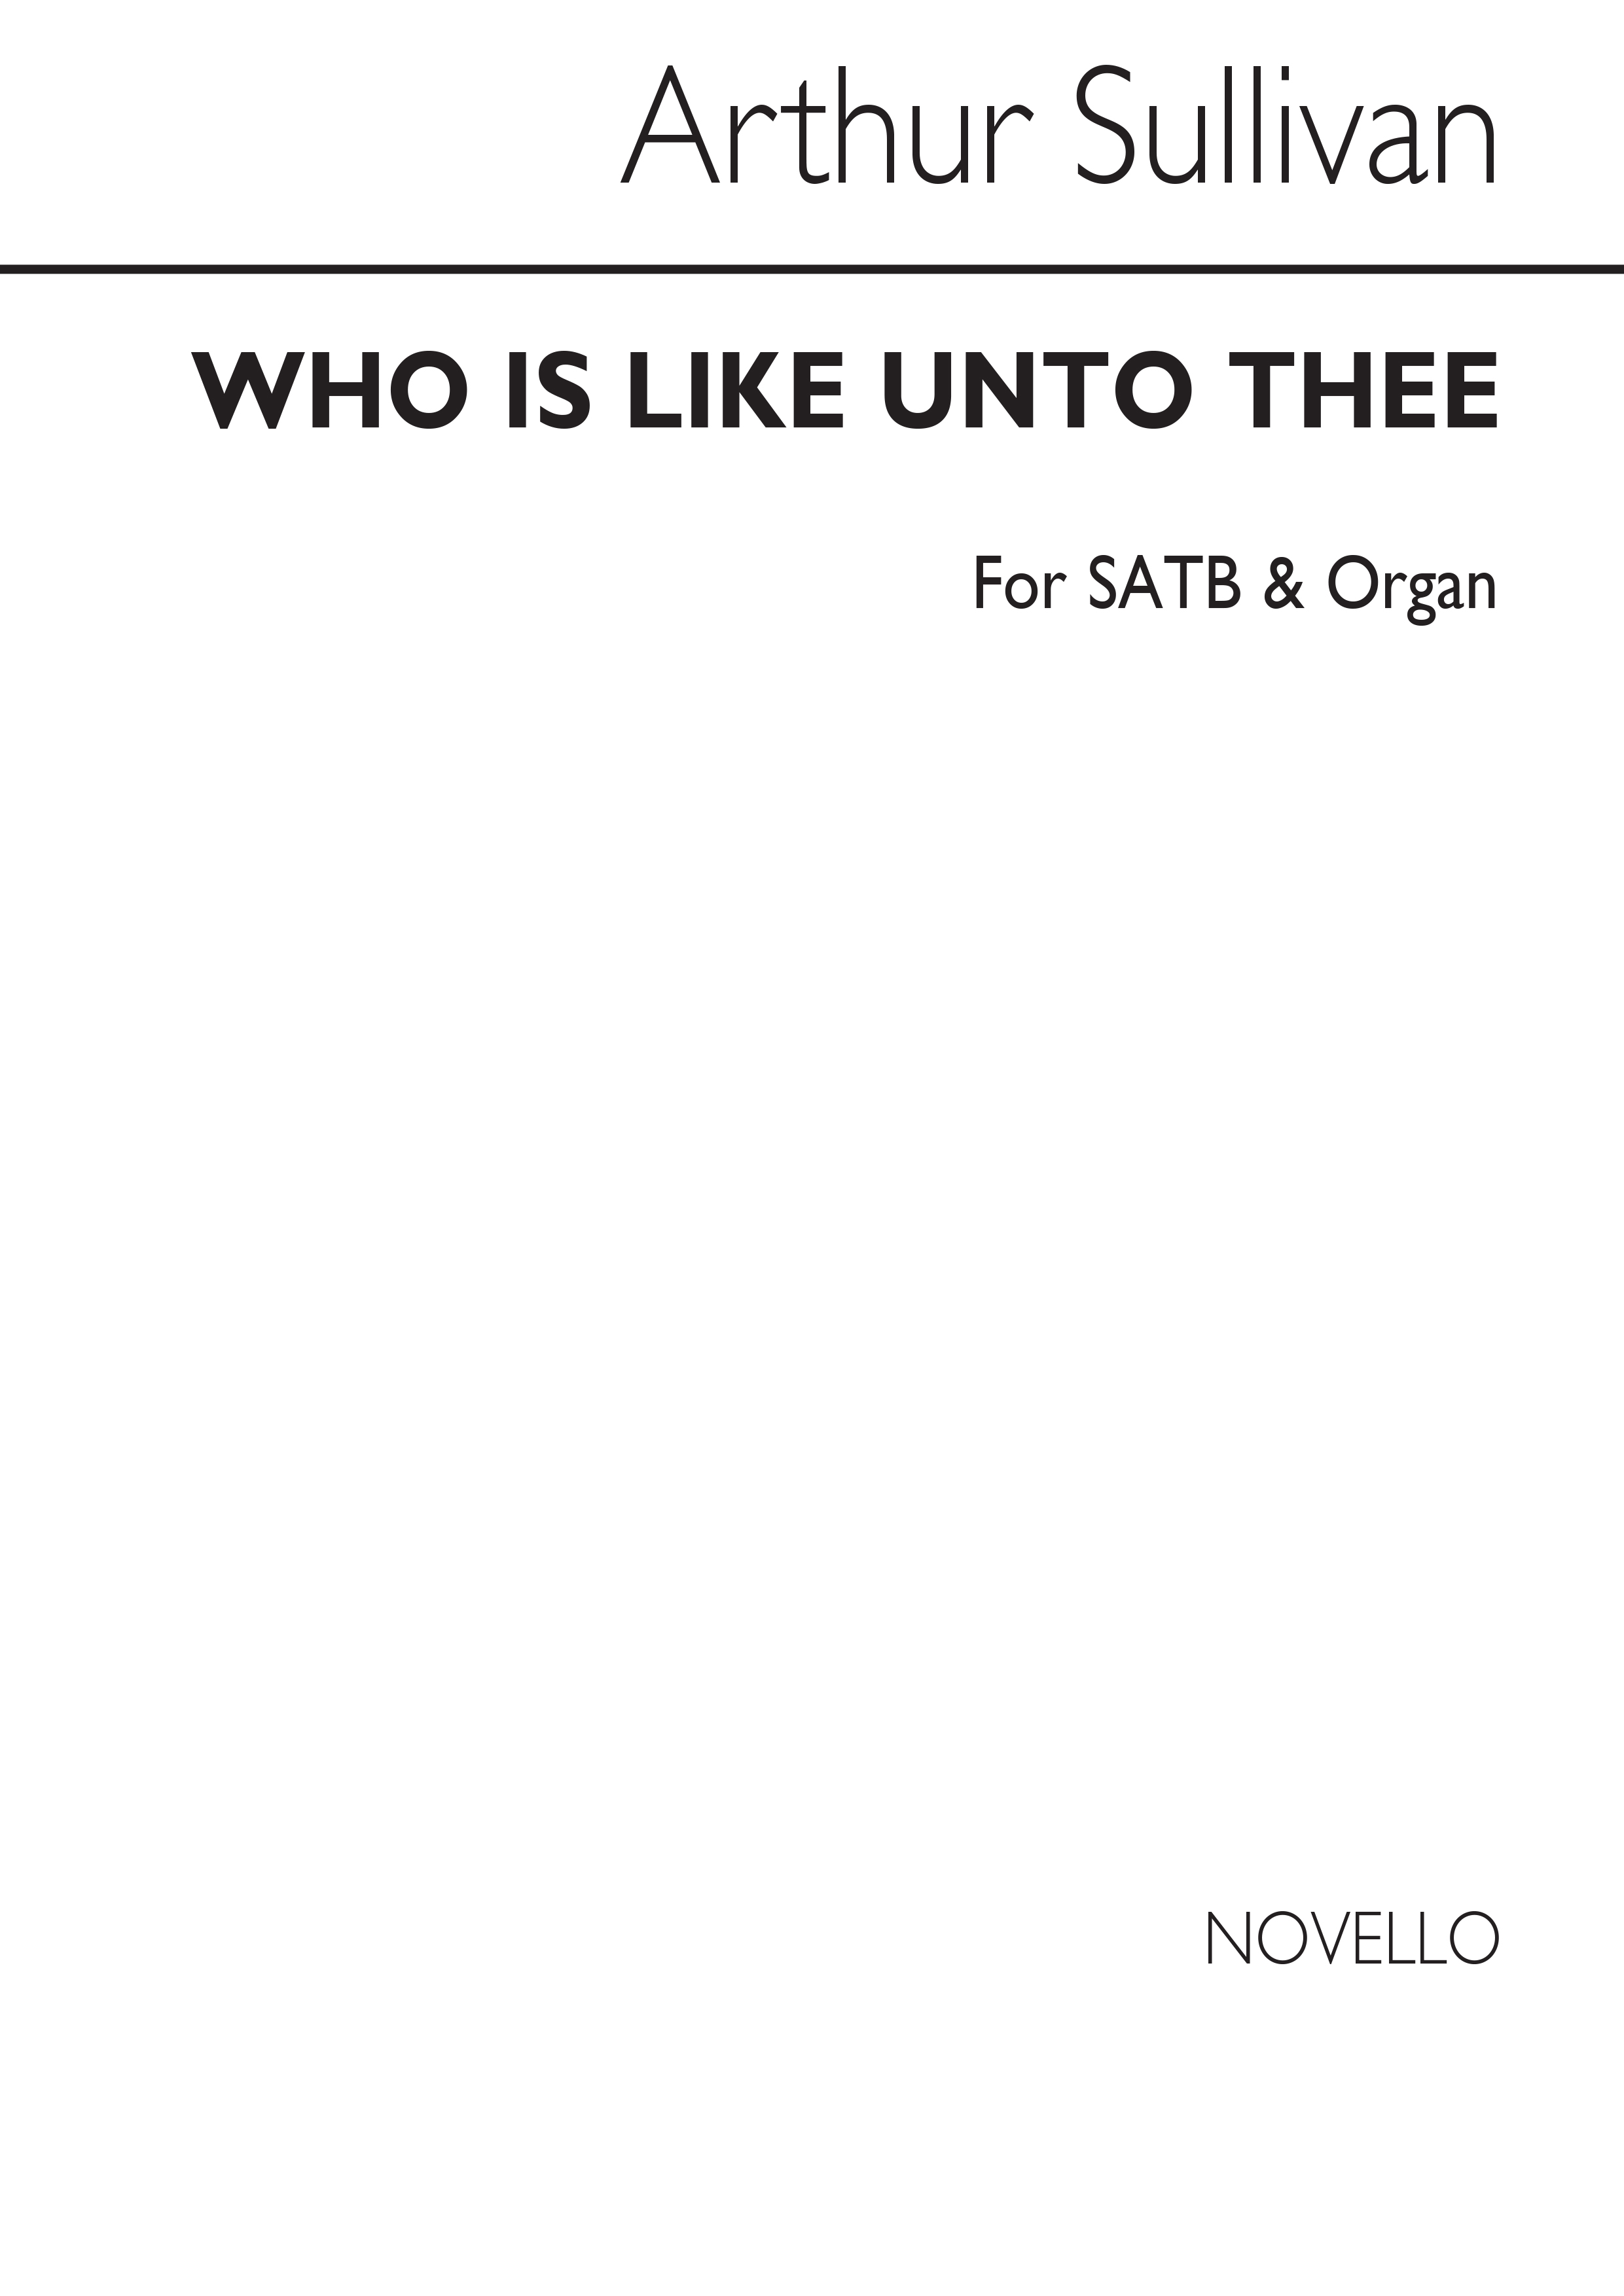 Arthur Seymour Sullivan: Who Is Like Unto Thee: SATB: Vocal Score